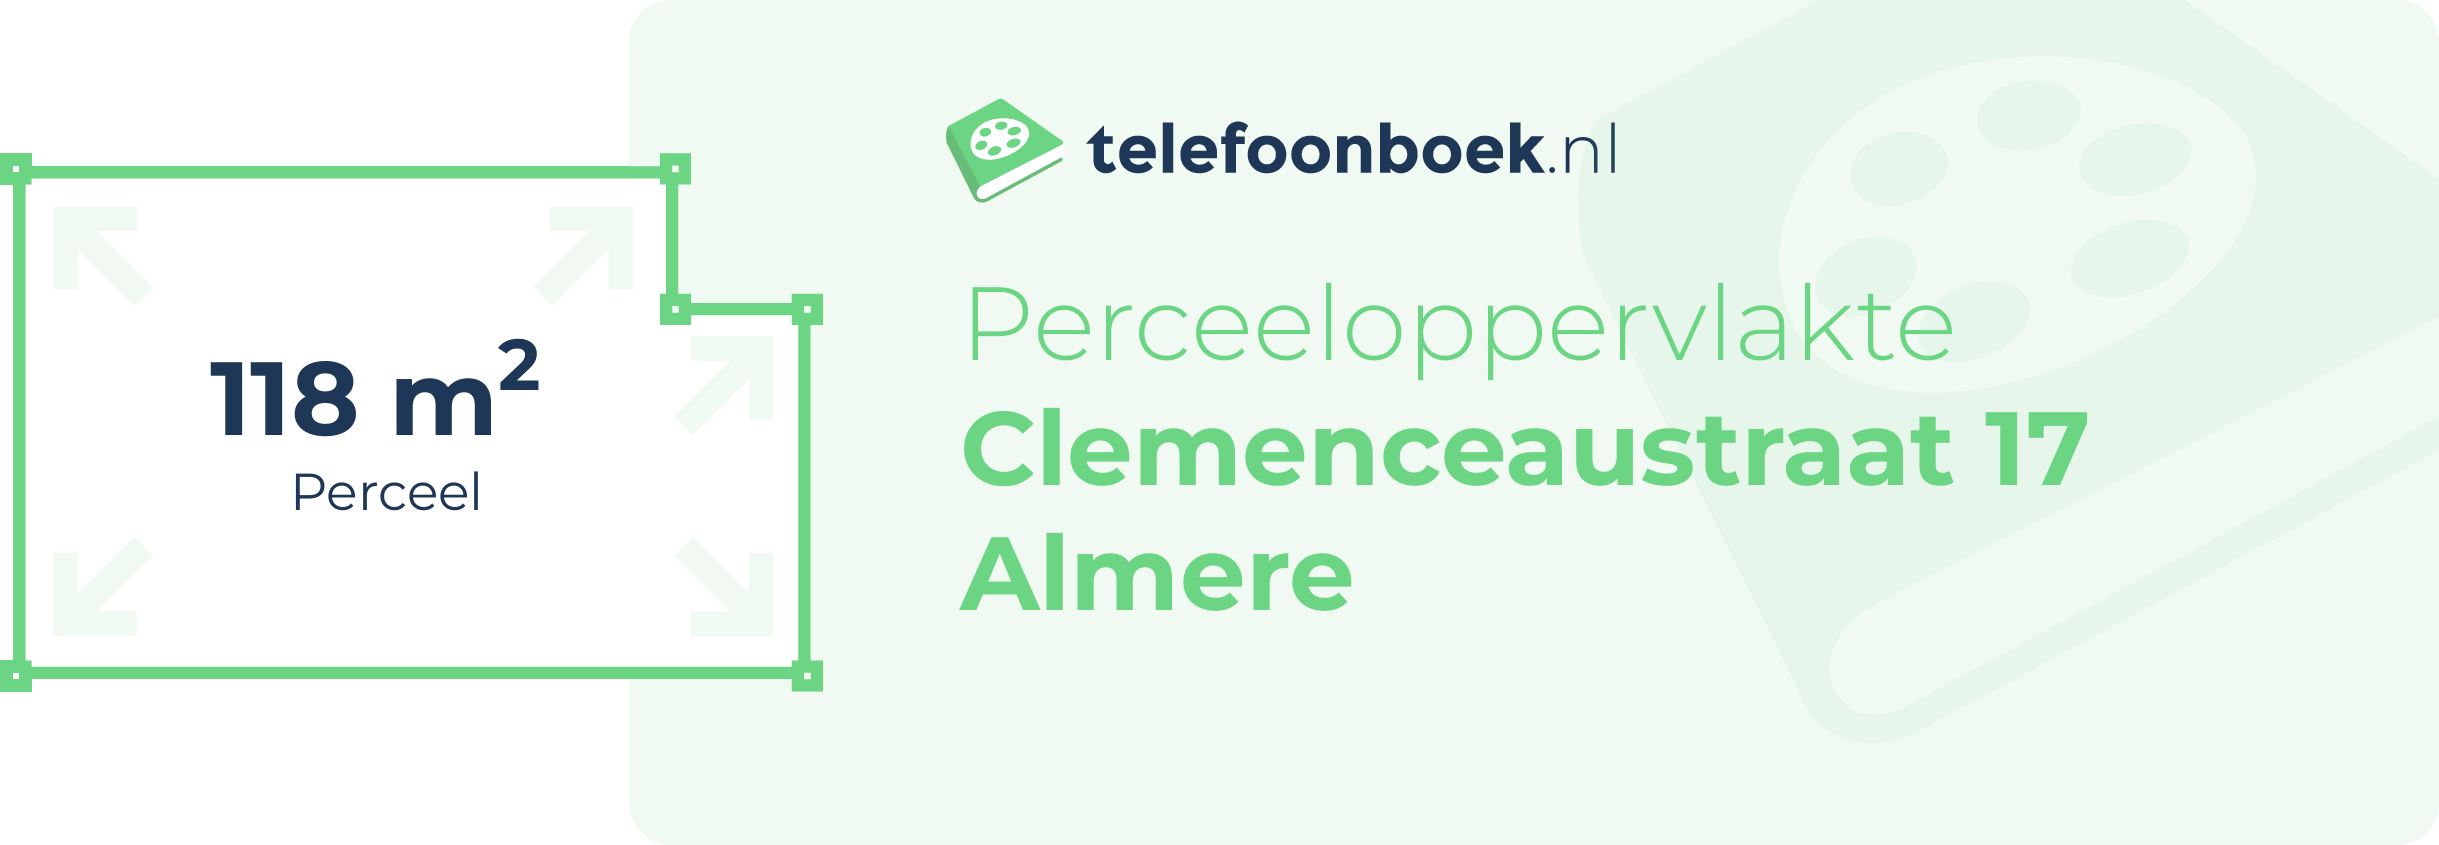 Perceeloppervlakte Clemenceaustraat 17 Almere